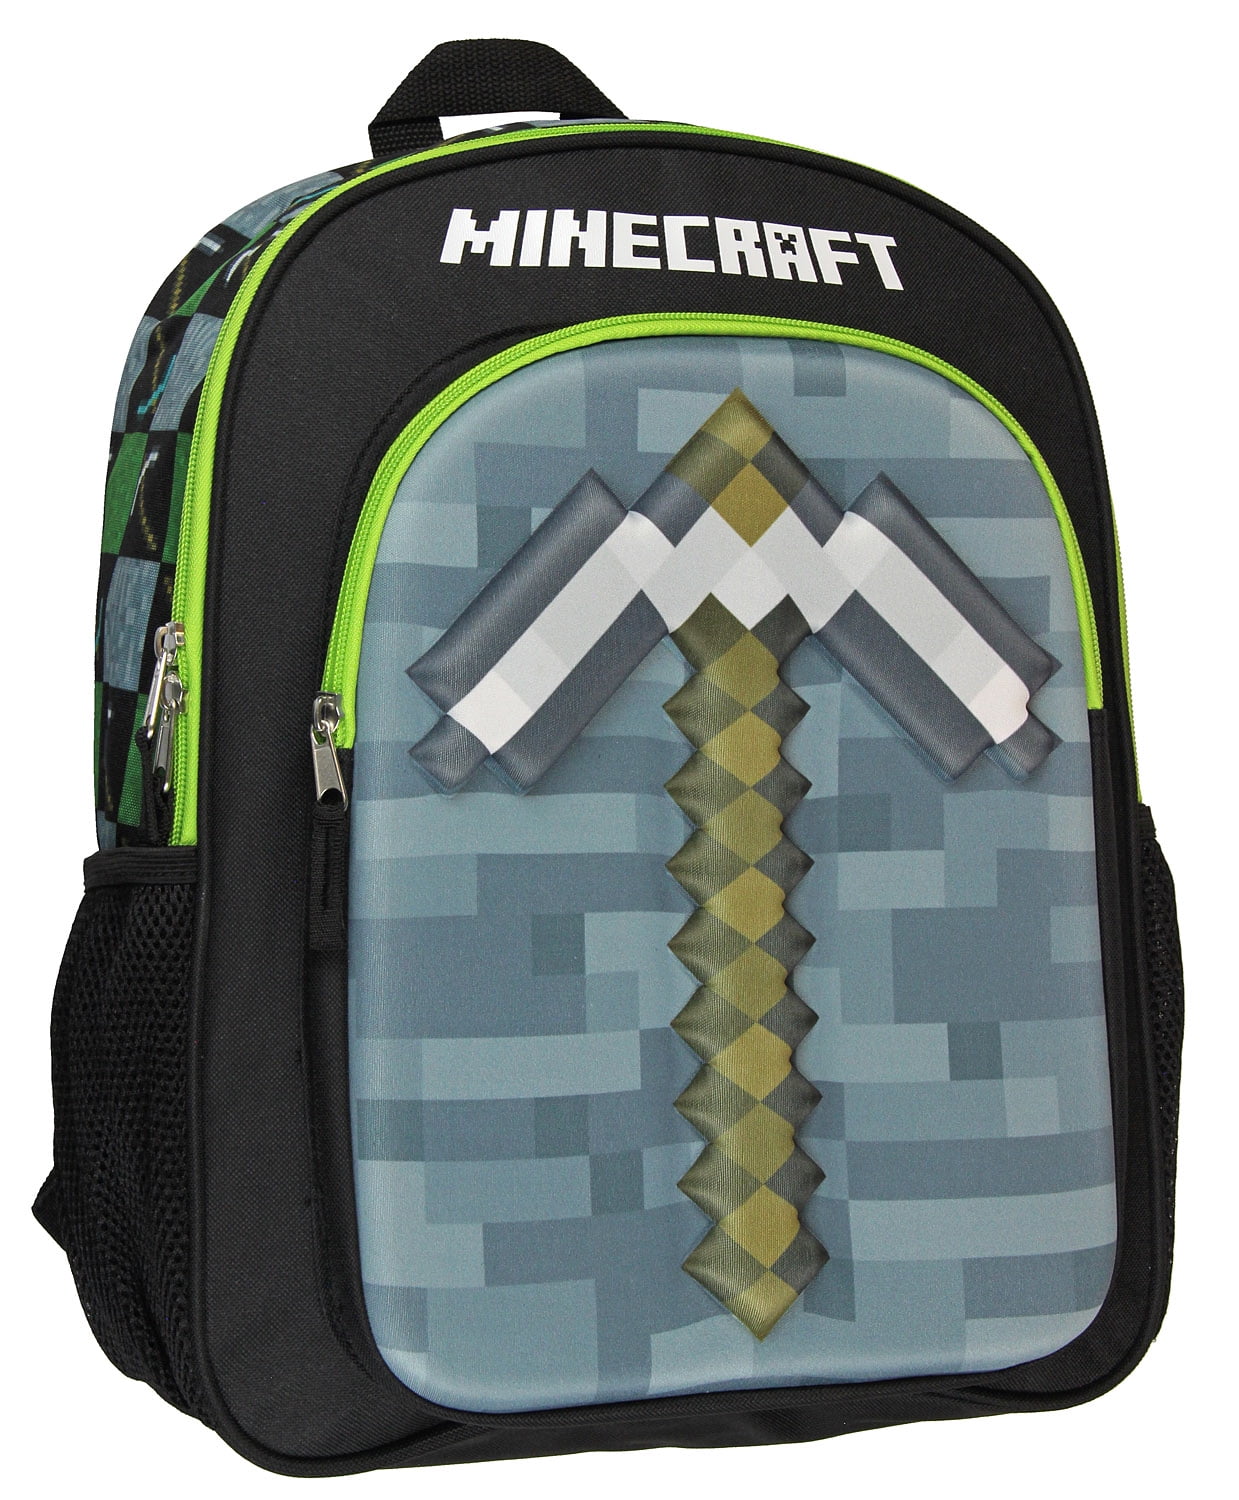 Childrens Kids Official Minecraft Backpack School Bag 